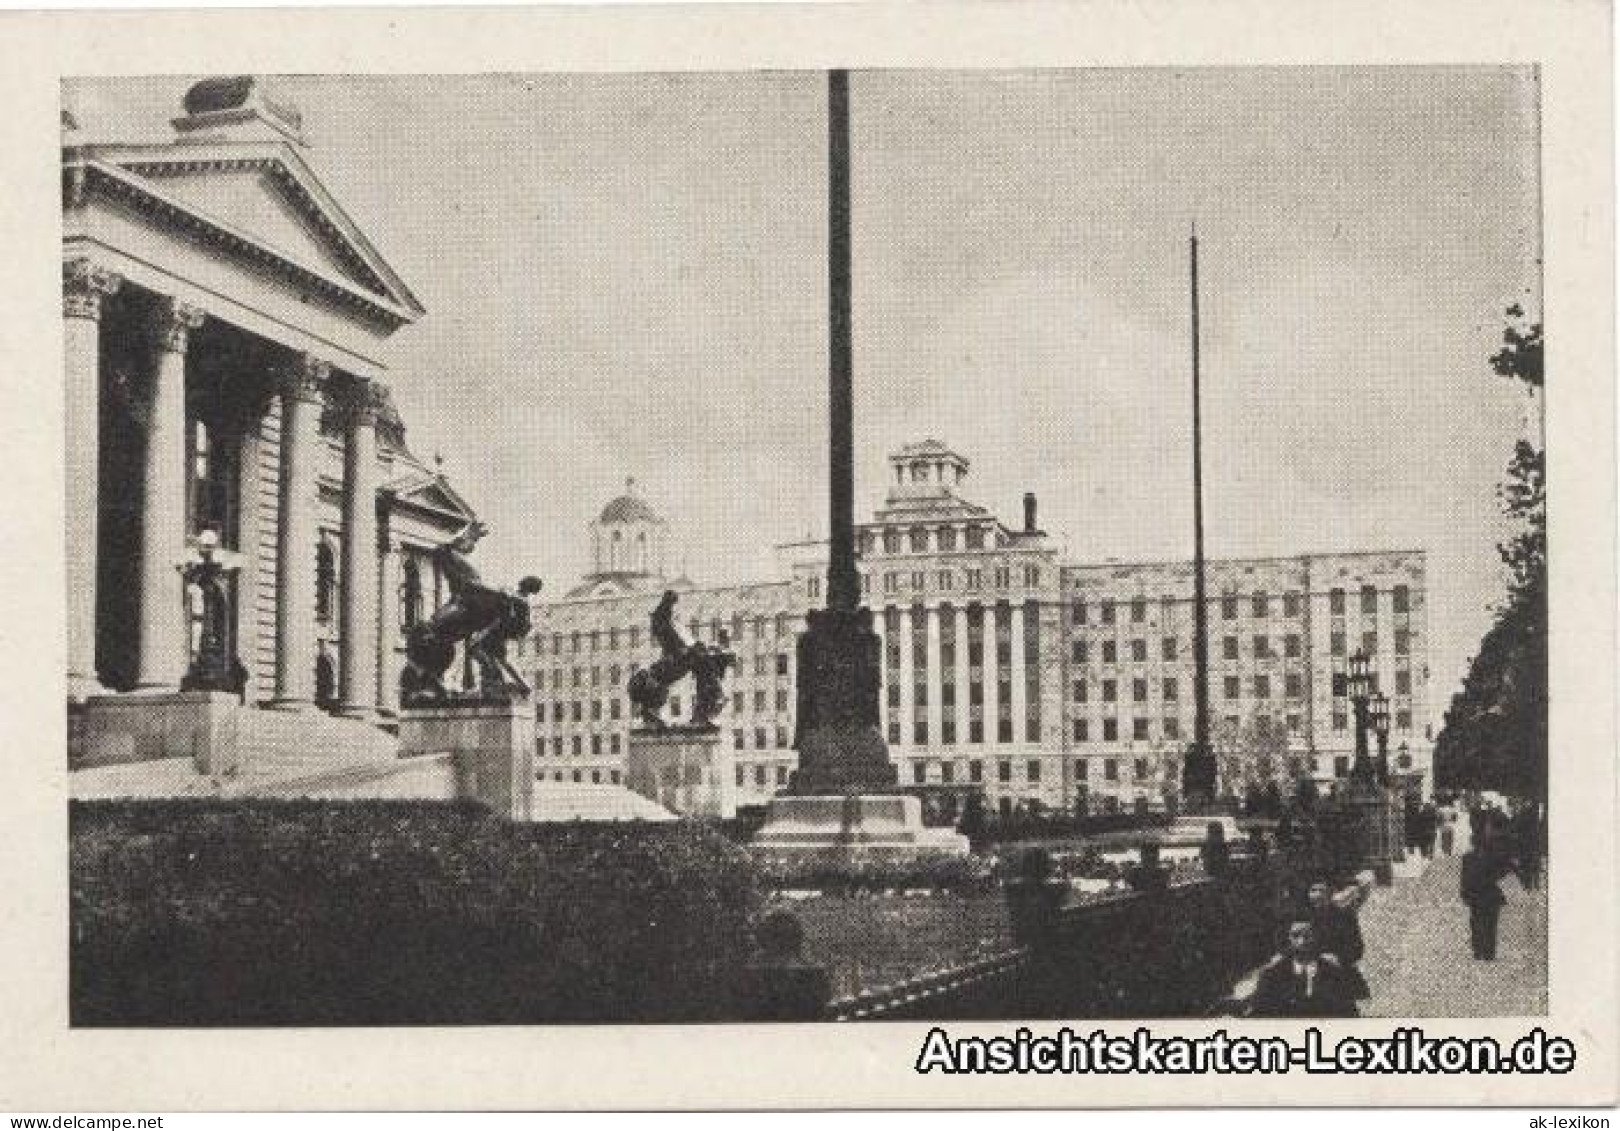 Postcard Belgrad Beograd (Београд) Skupstina I Post Stedionica  - Serbie